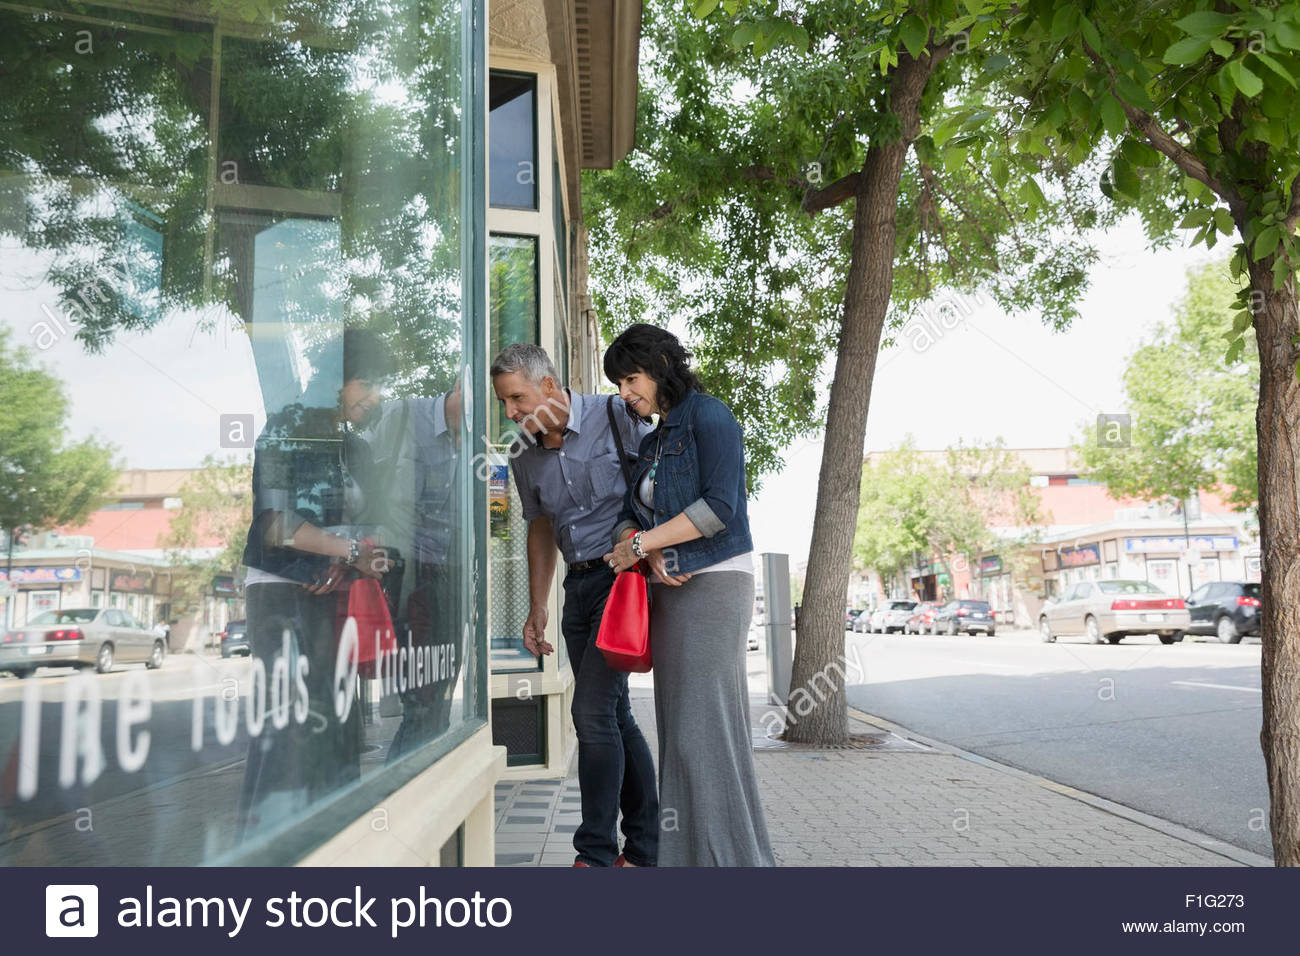 Couple window shopping at storefront Stock Photo